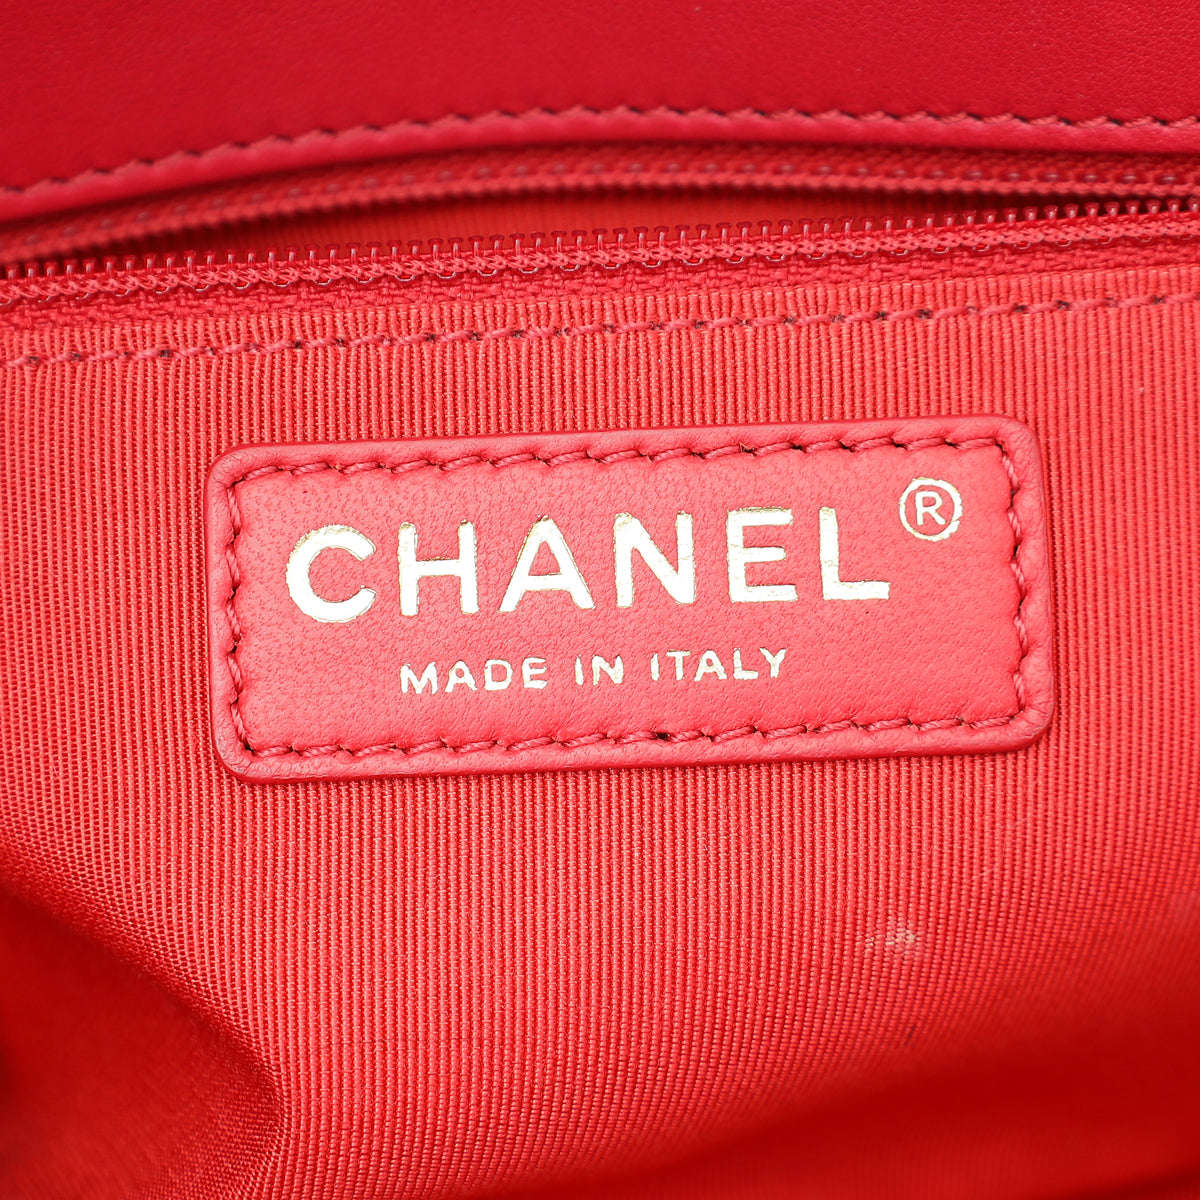 Chanel Bicolor Mini Mademoiselle Chic Flap Bag